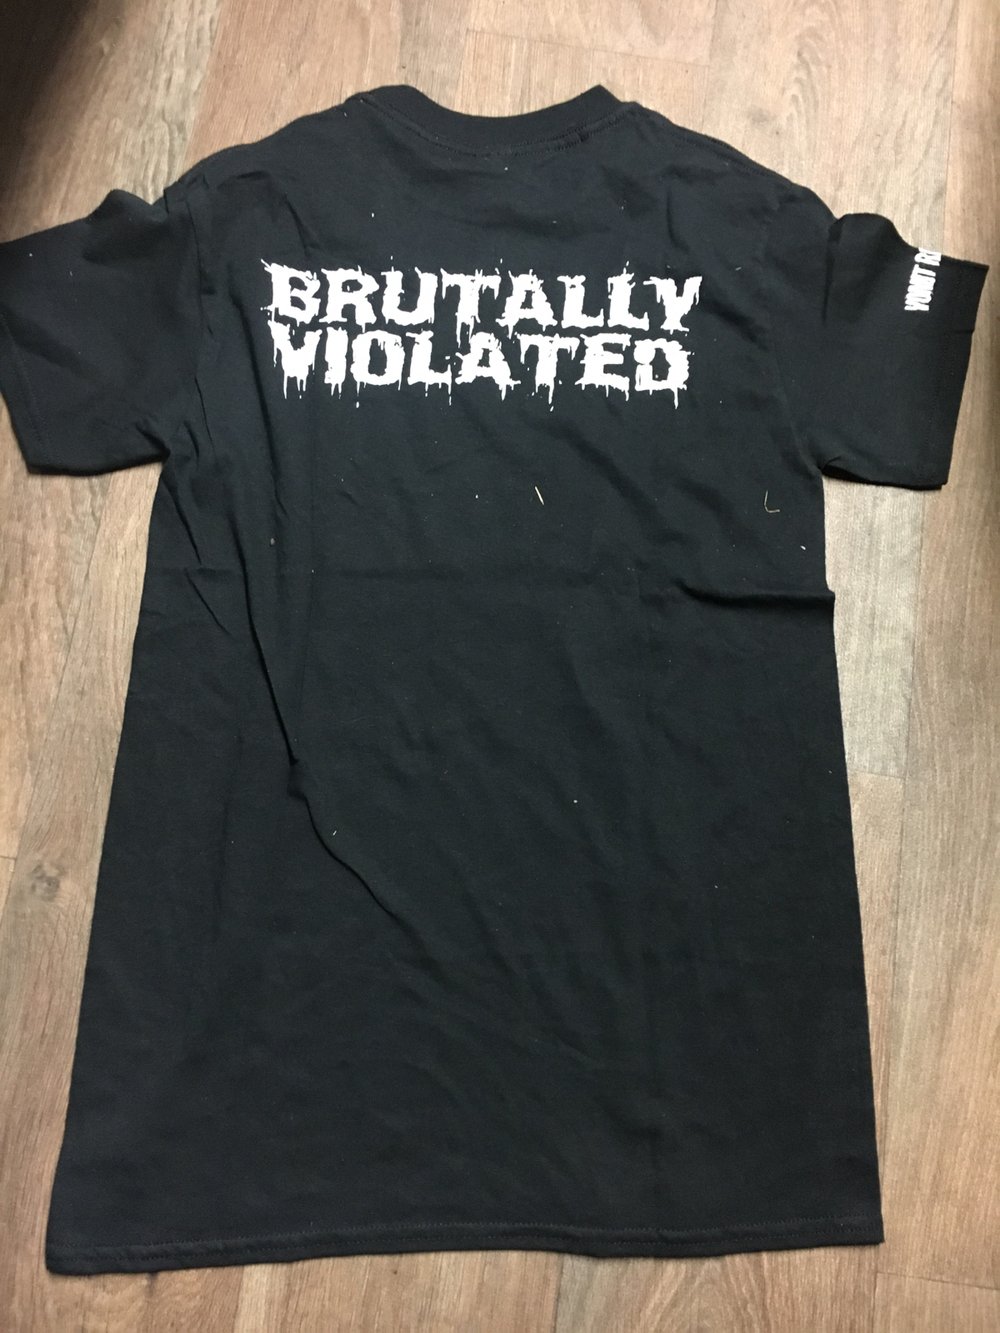 VOMIT REMNANTS - Brutally Violated T-Shirt 